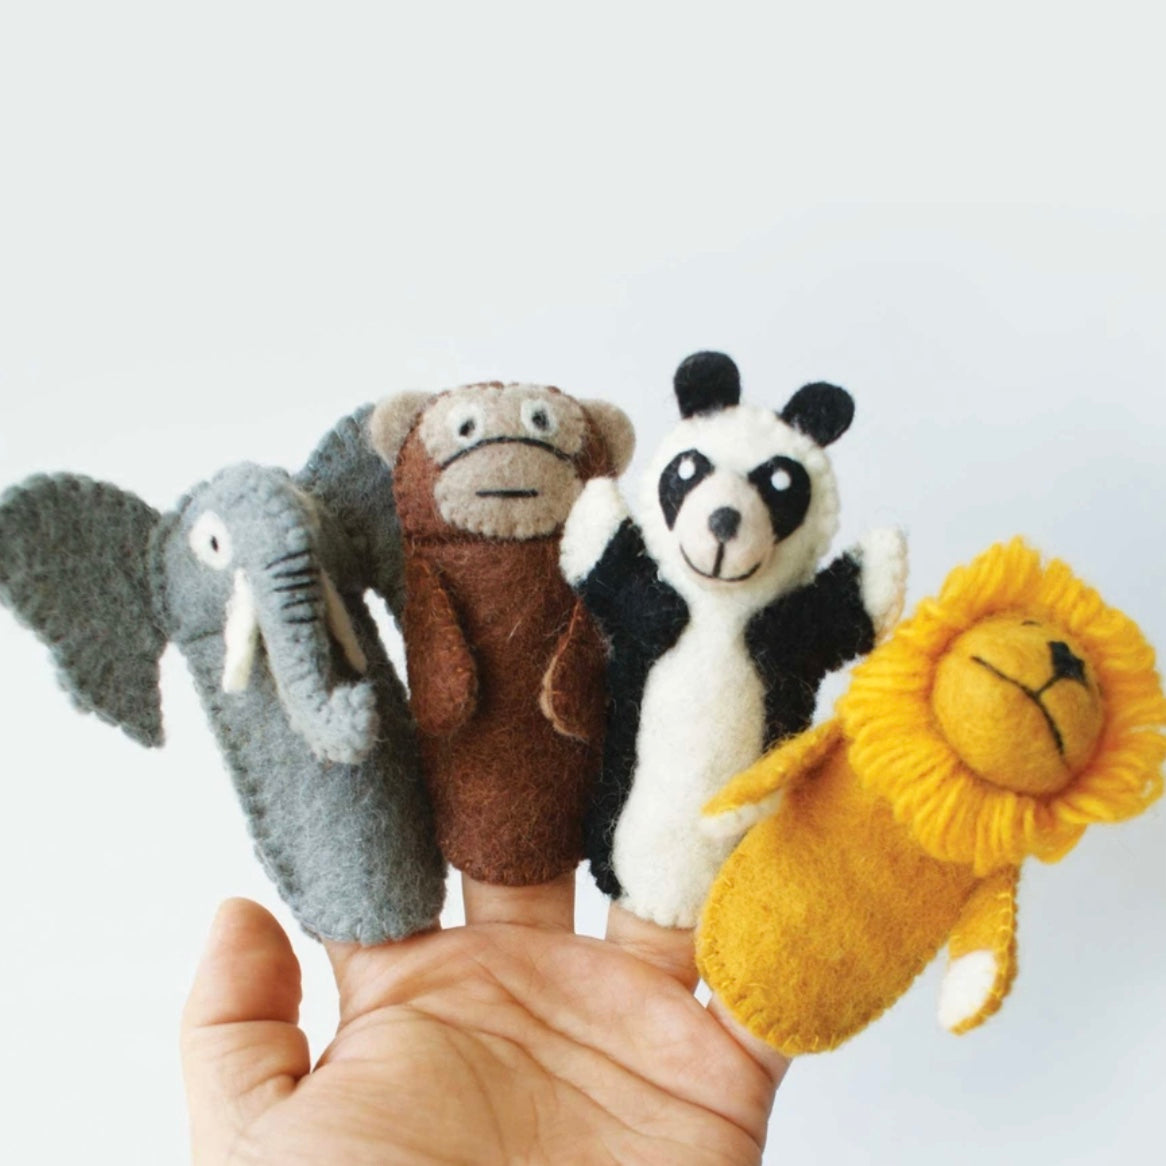 Hamro Felted Wool Finger Puppets